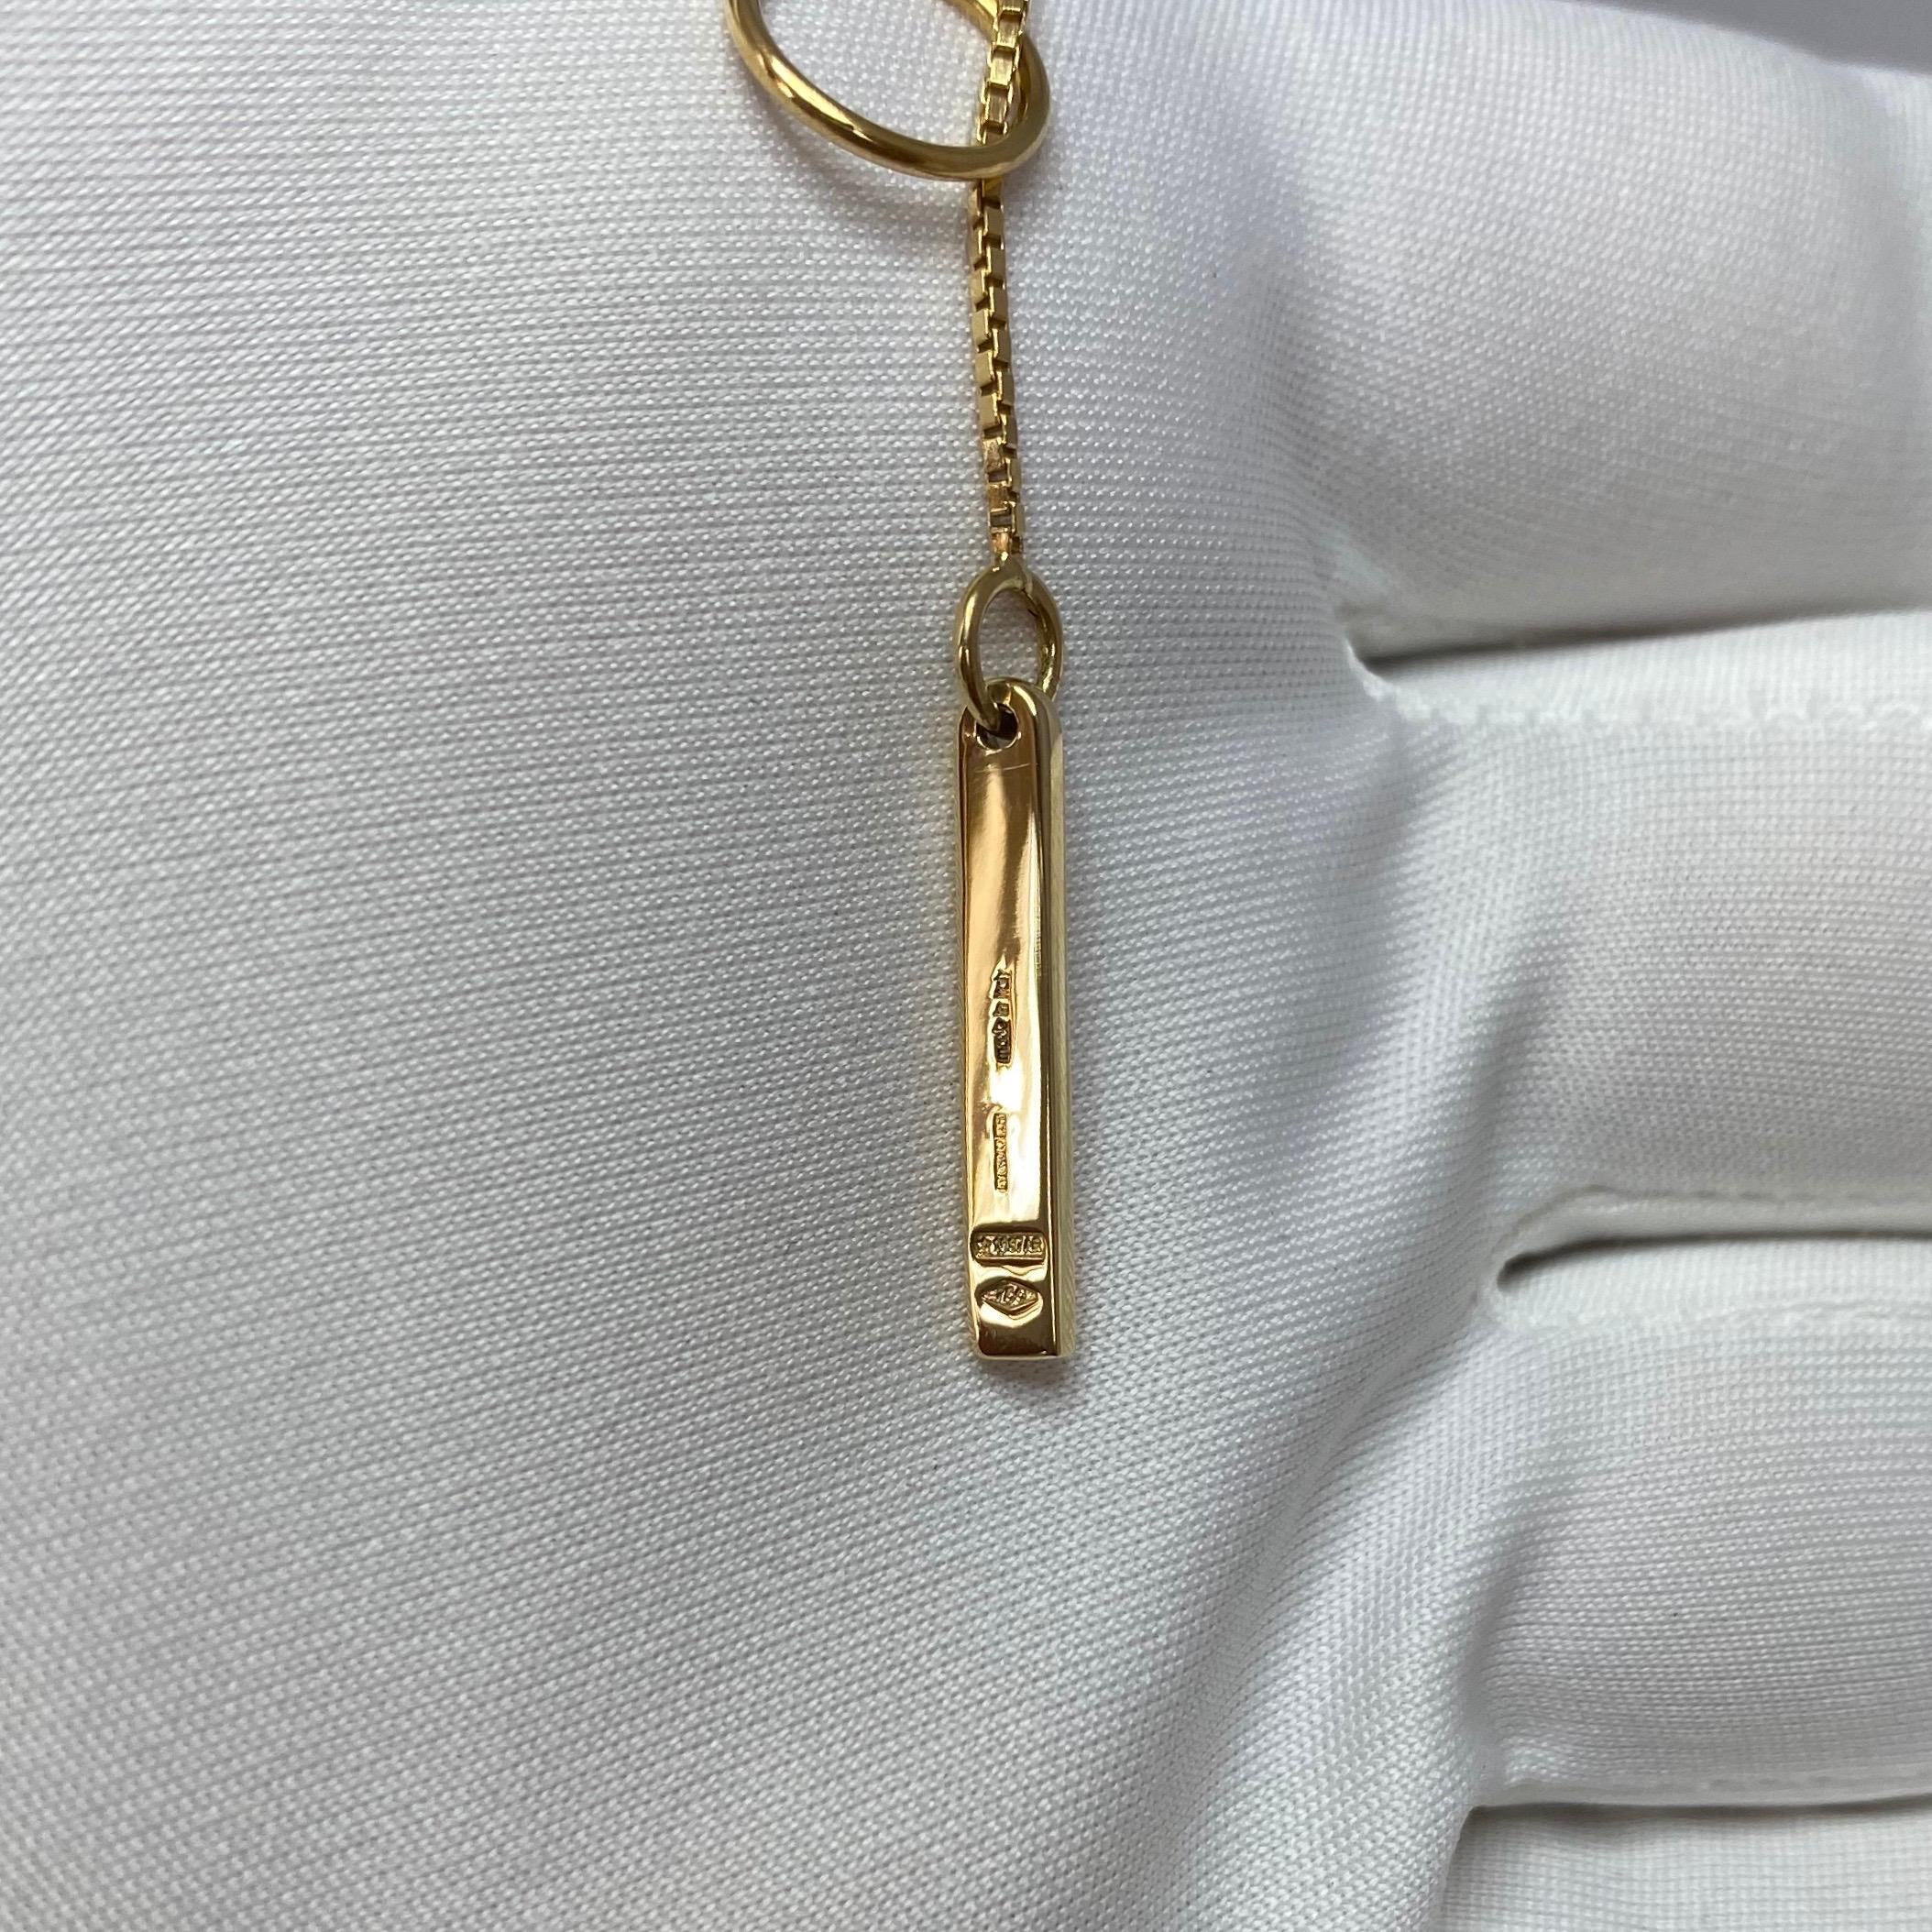 Gucci 18 Karat Yellow Gold Bar Lariat Pendant Necklace with Original Gucci Box 2